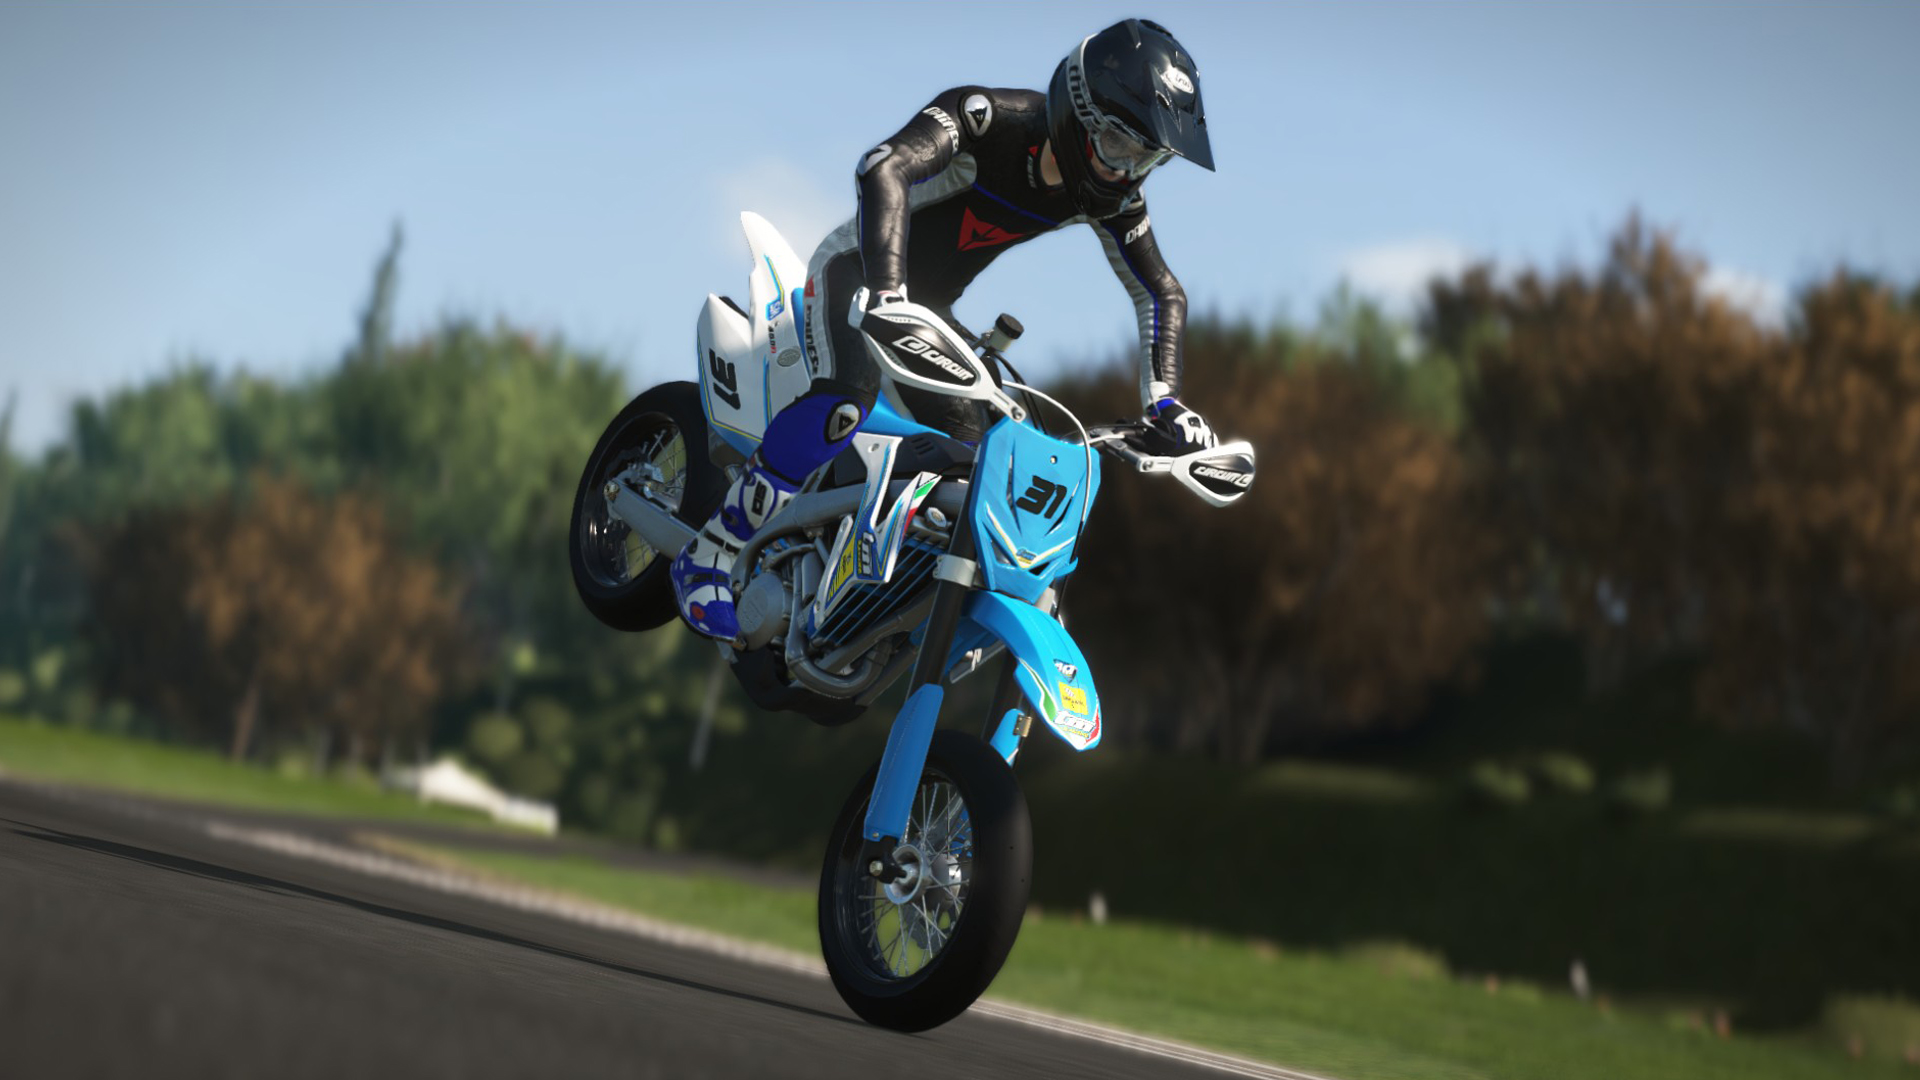 Ride 2 PC Game Free Download Full Version Through Direct 